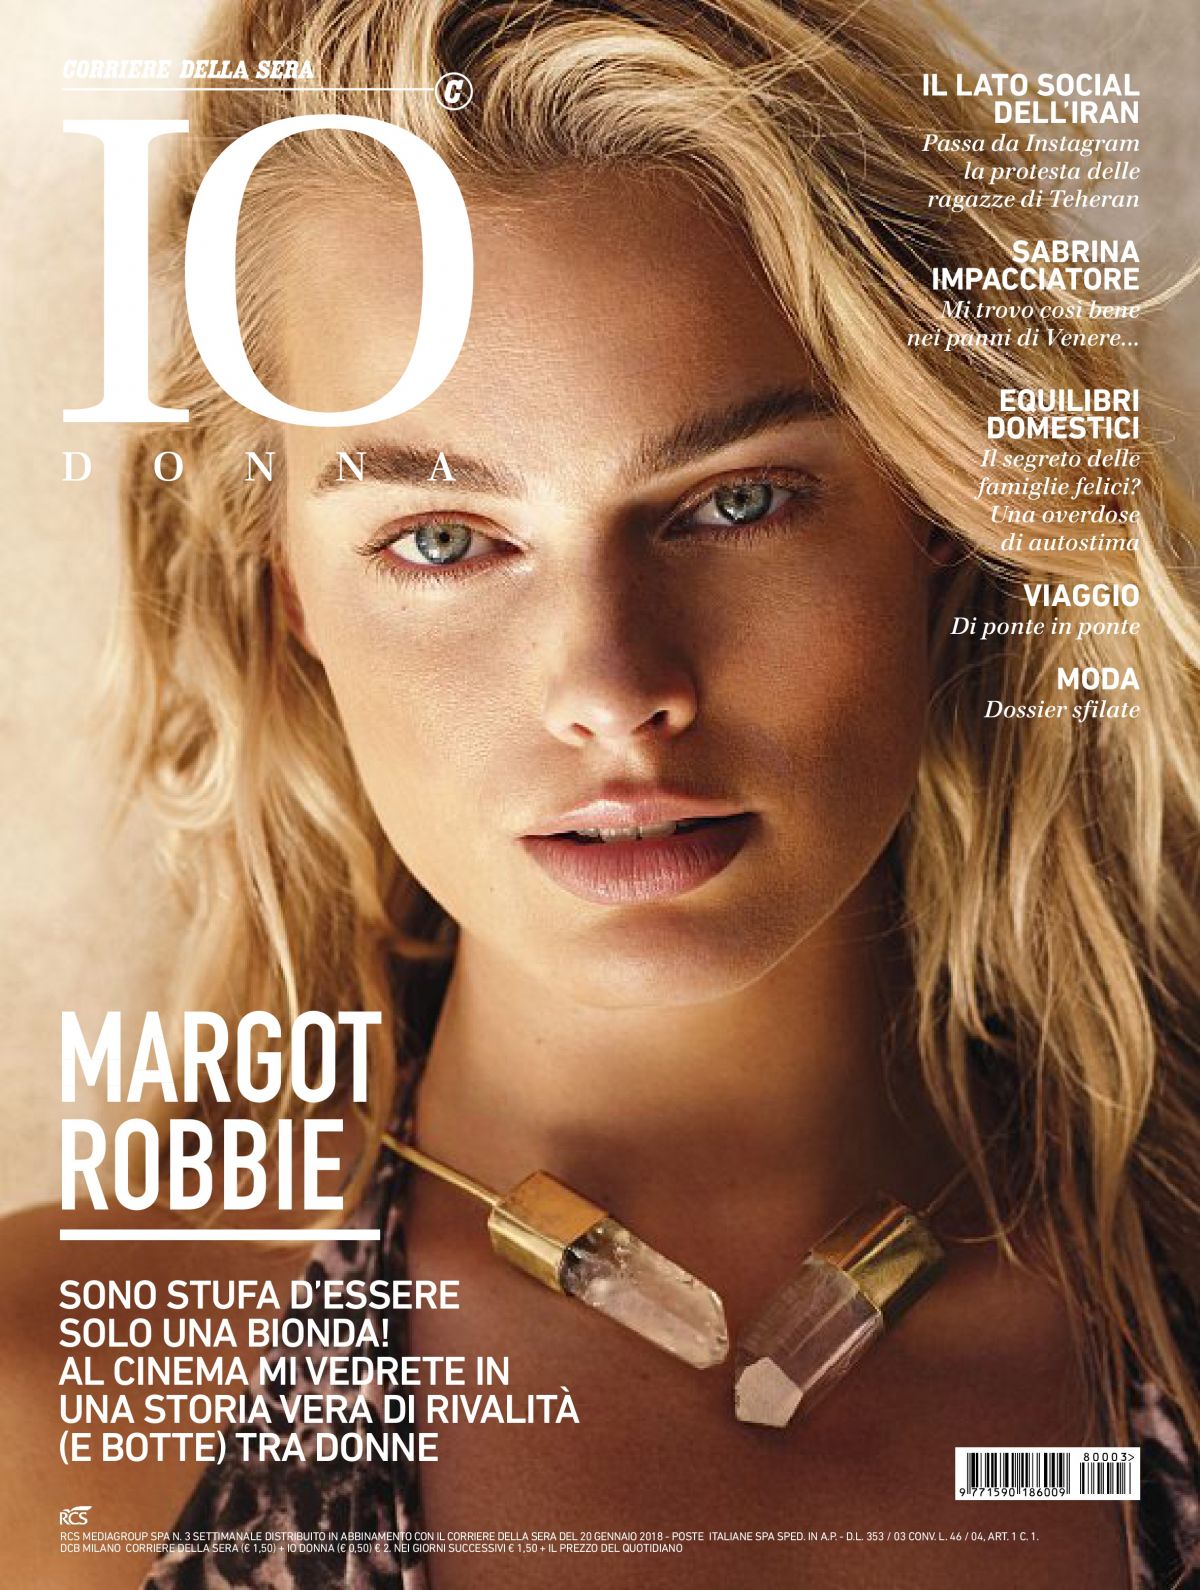 Elle Magazine Margot Robbie Photoshoot 2018 Wallpapers